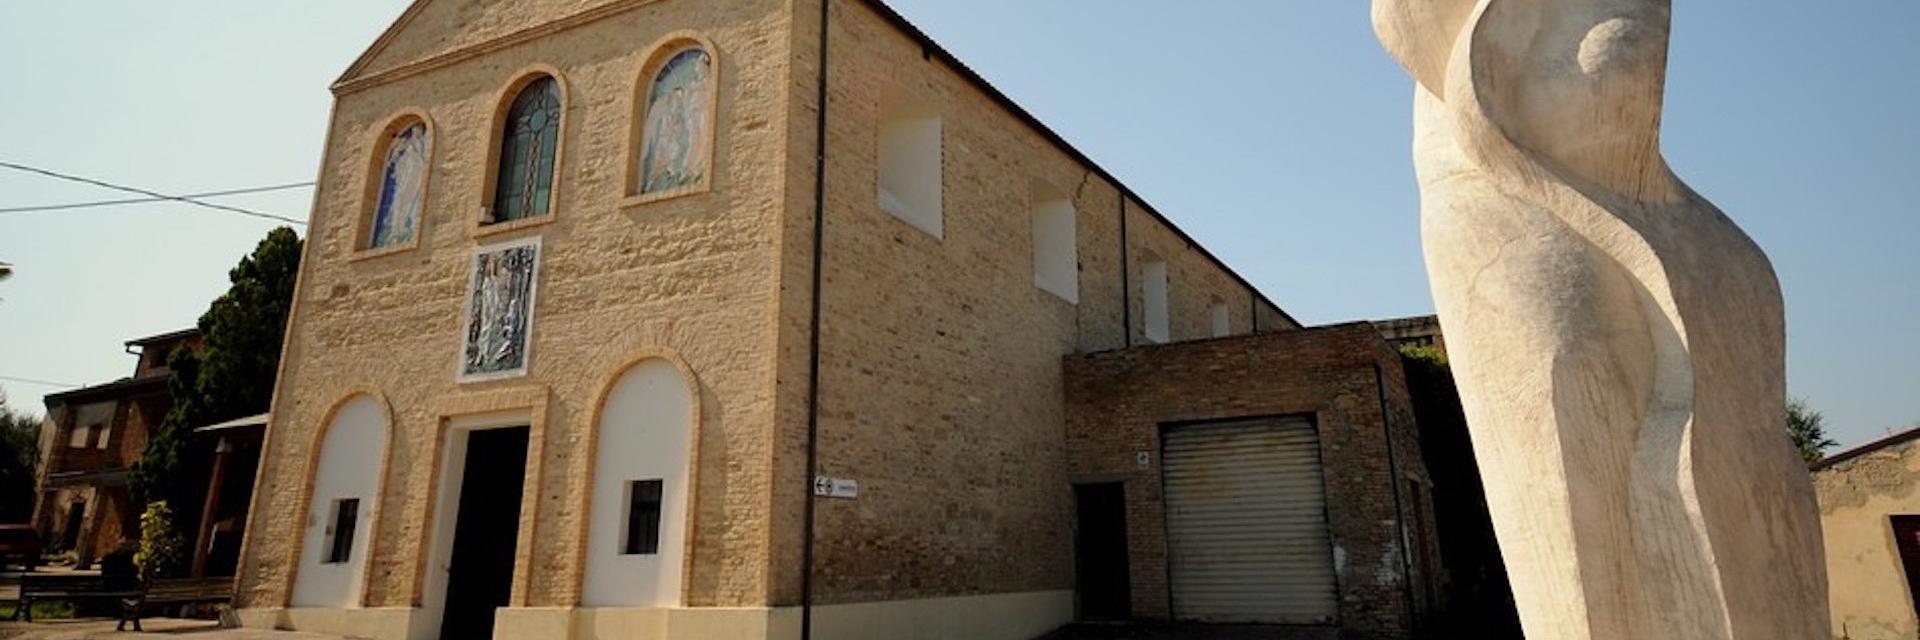 Chiesa Santa Maria del Popolo